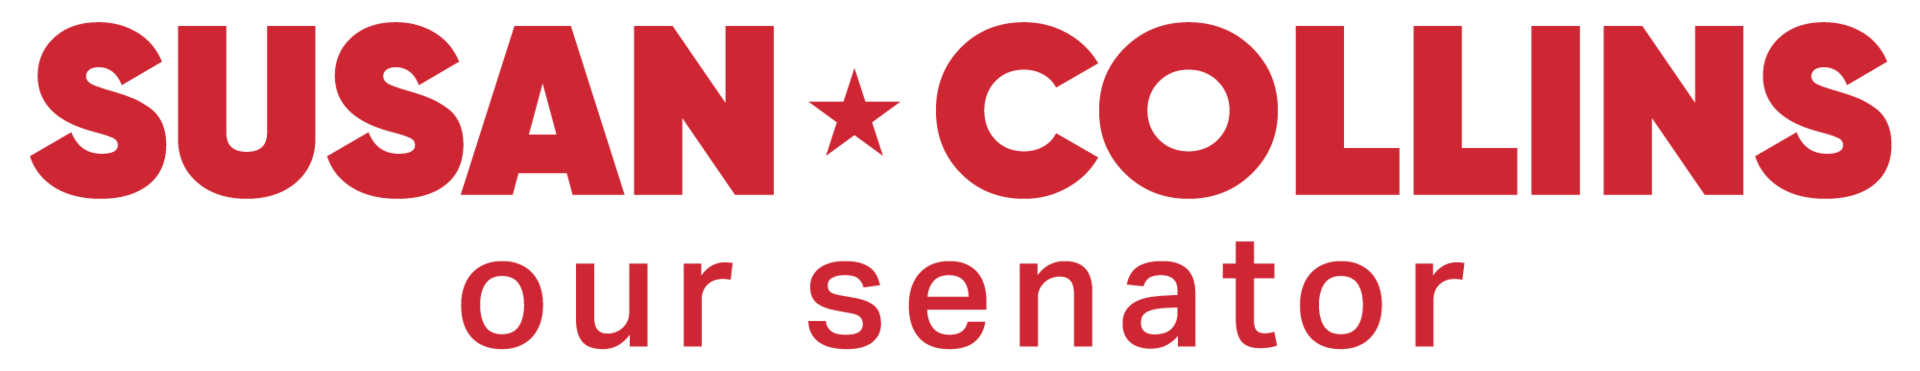 Collins logo horizontal final red